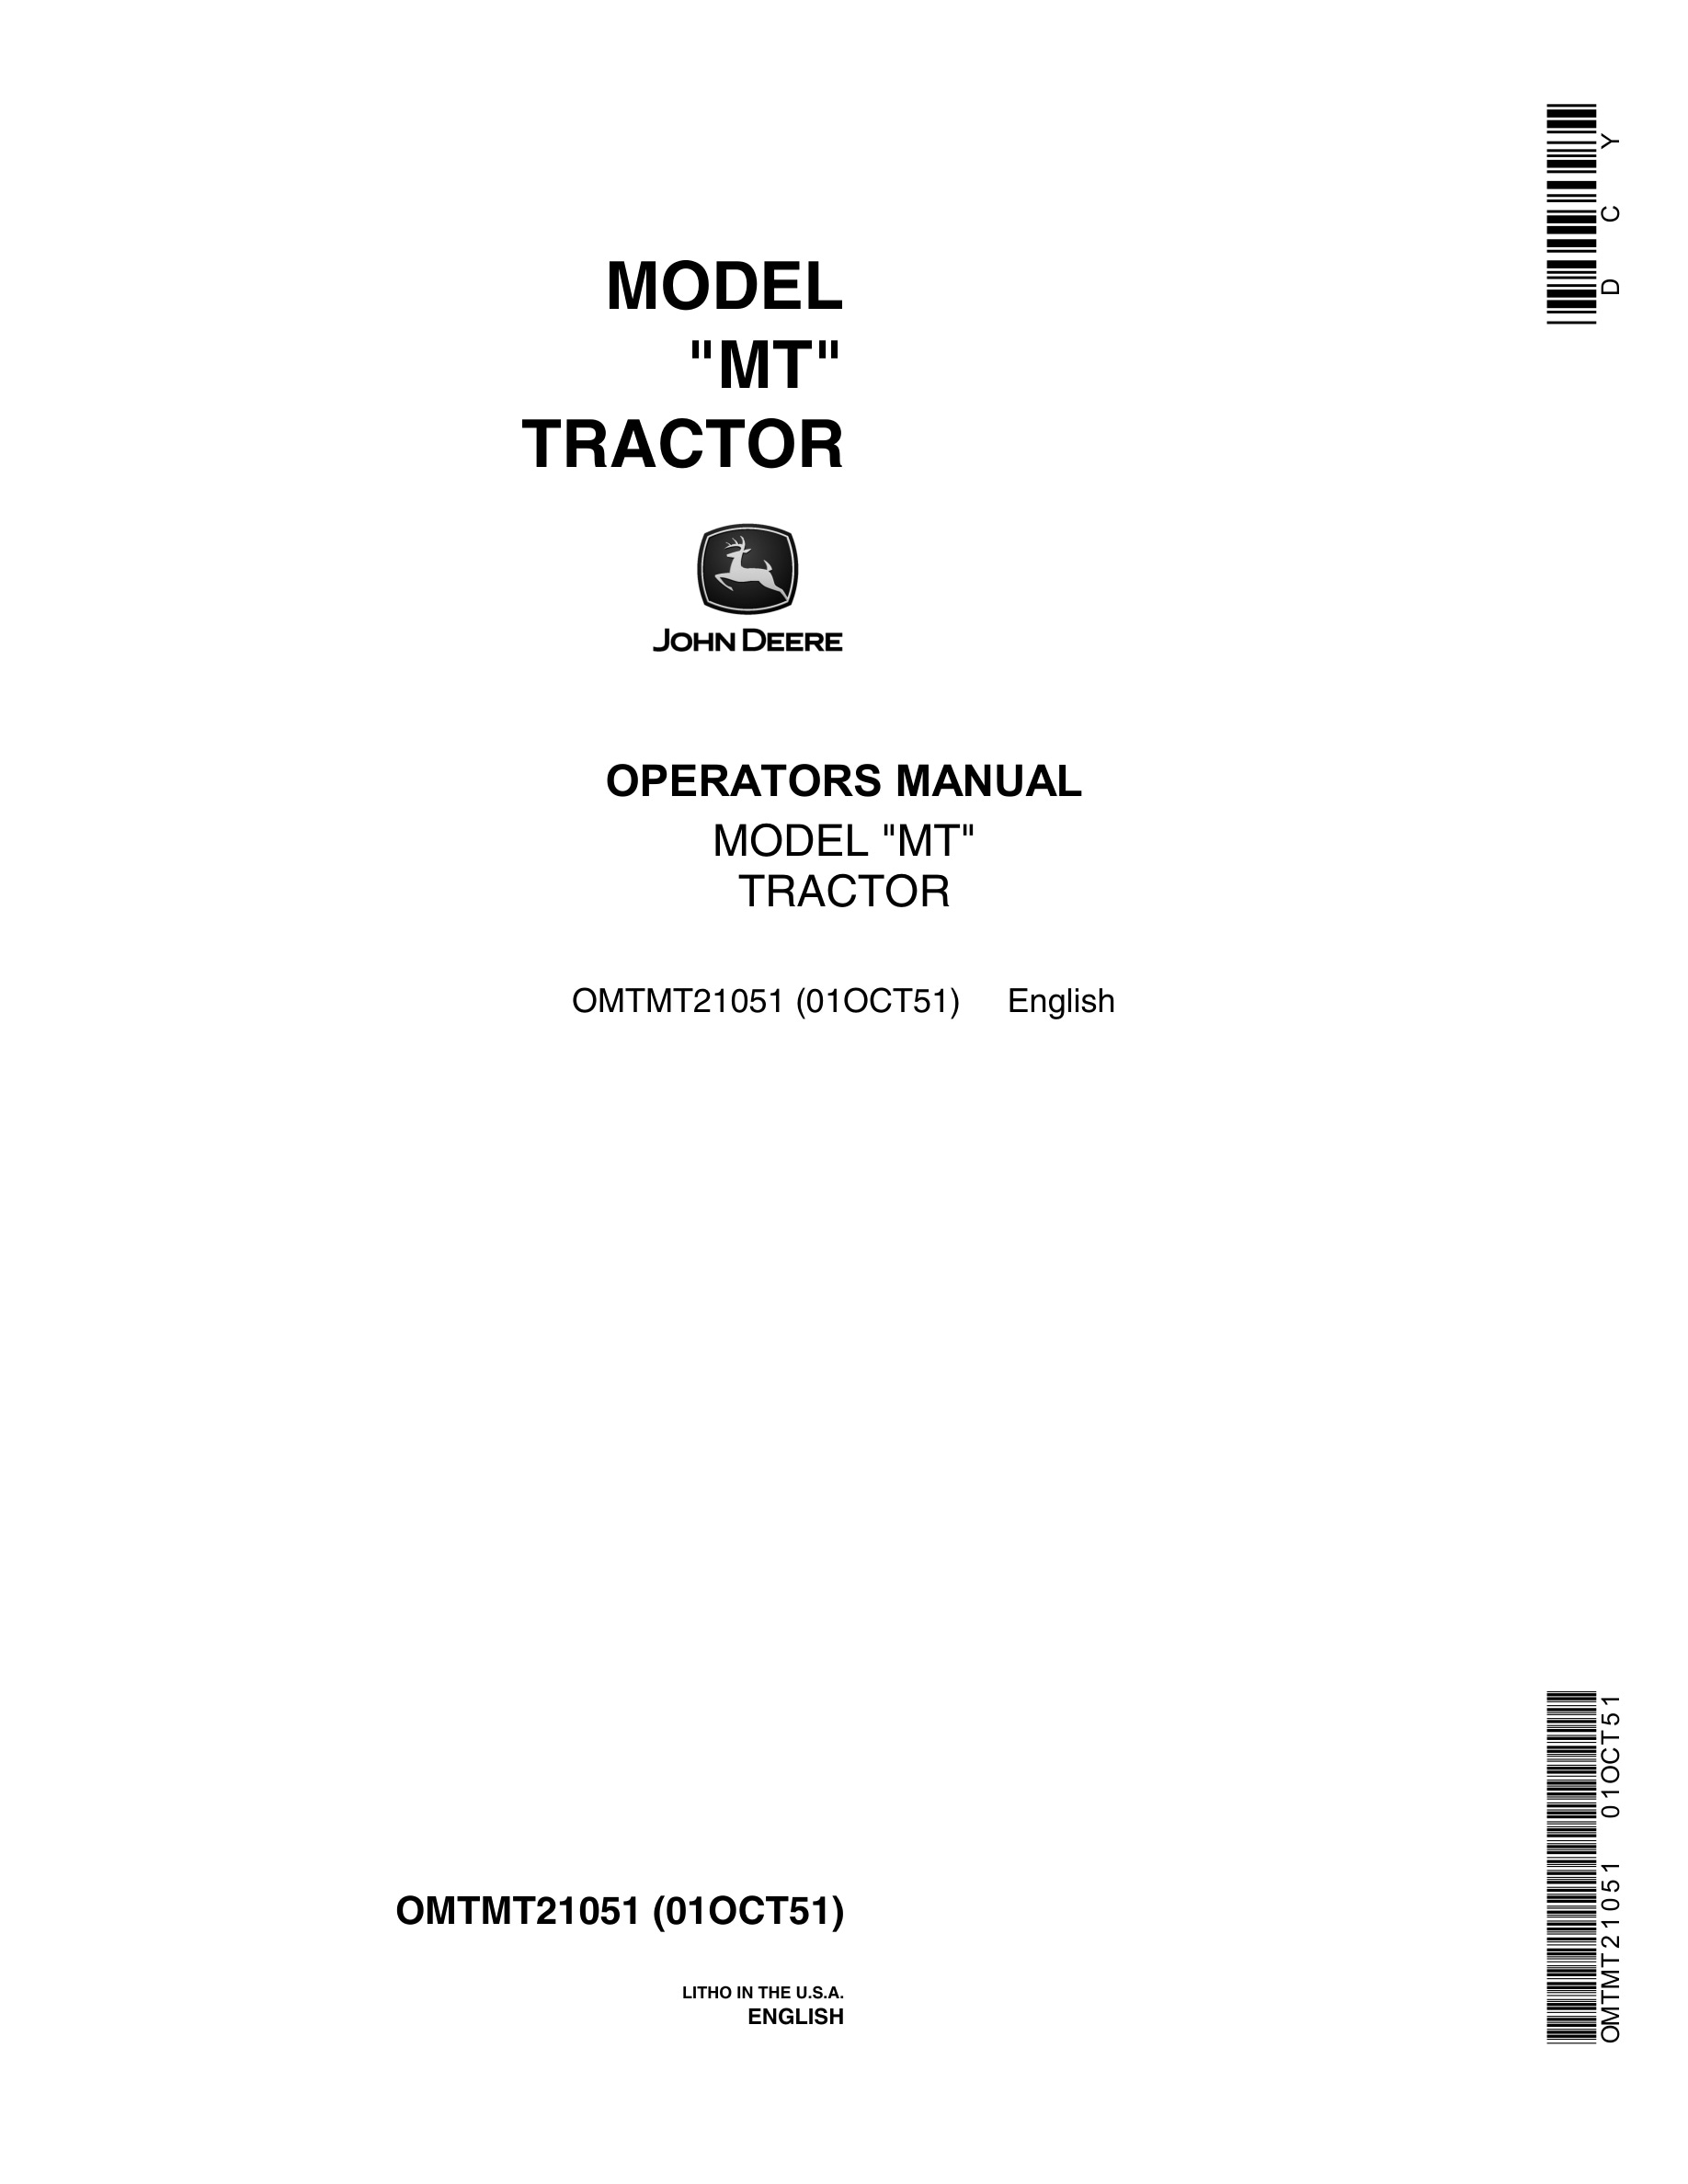 John Deere Model MT Tractor Operator Manual OMTMT21051-1